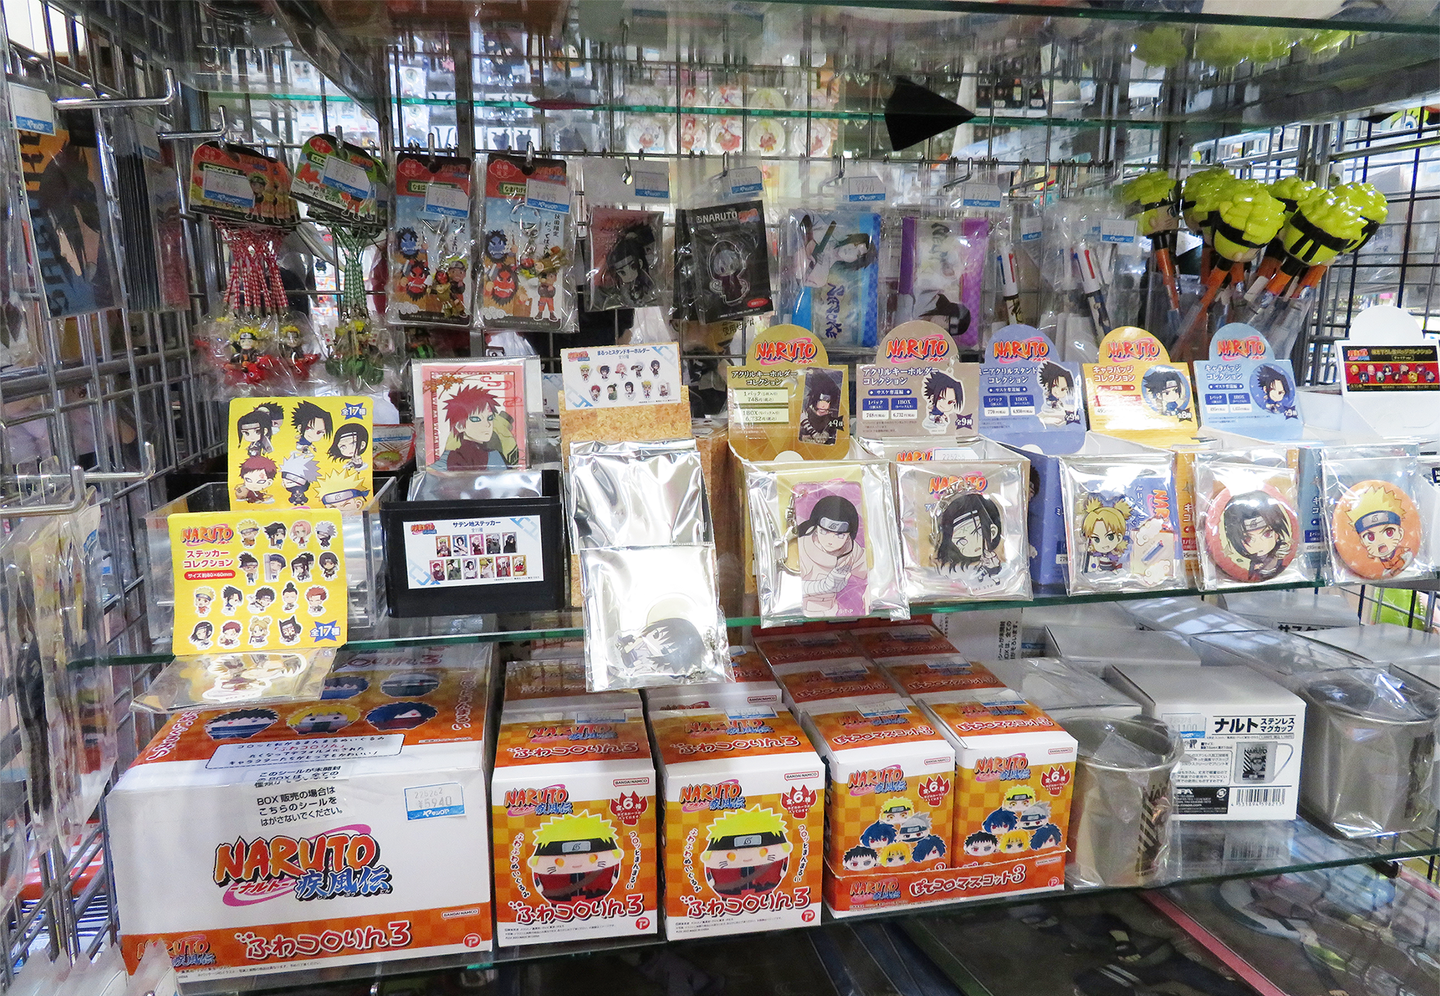 Images of NARUTO merchandise sold at YAMASHIROYA1